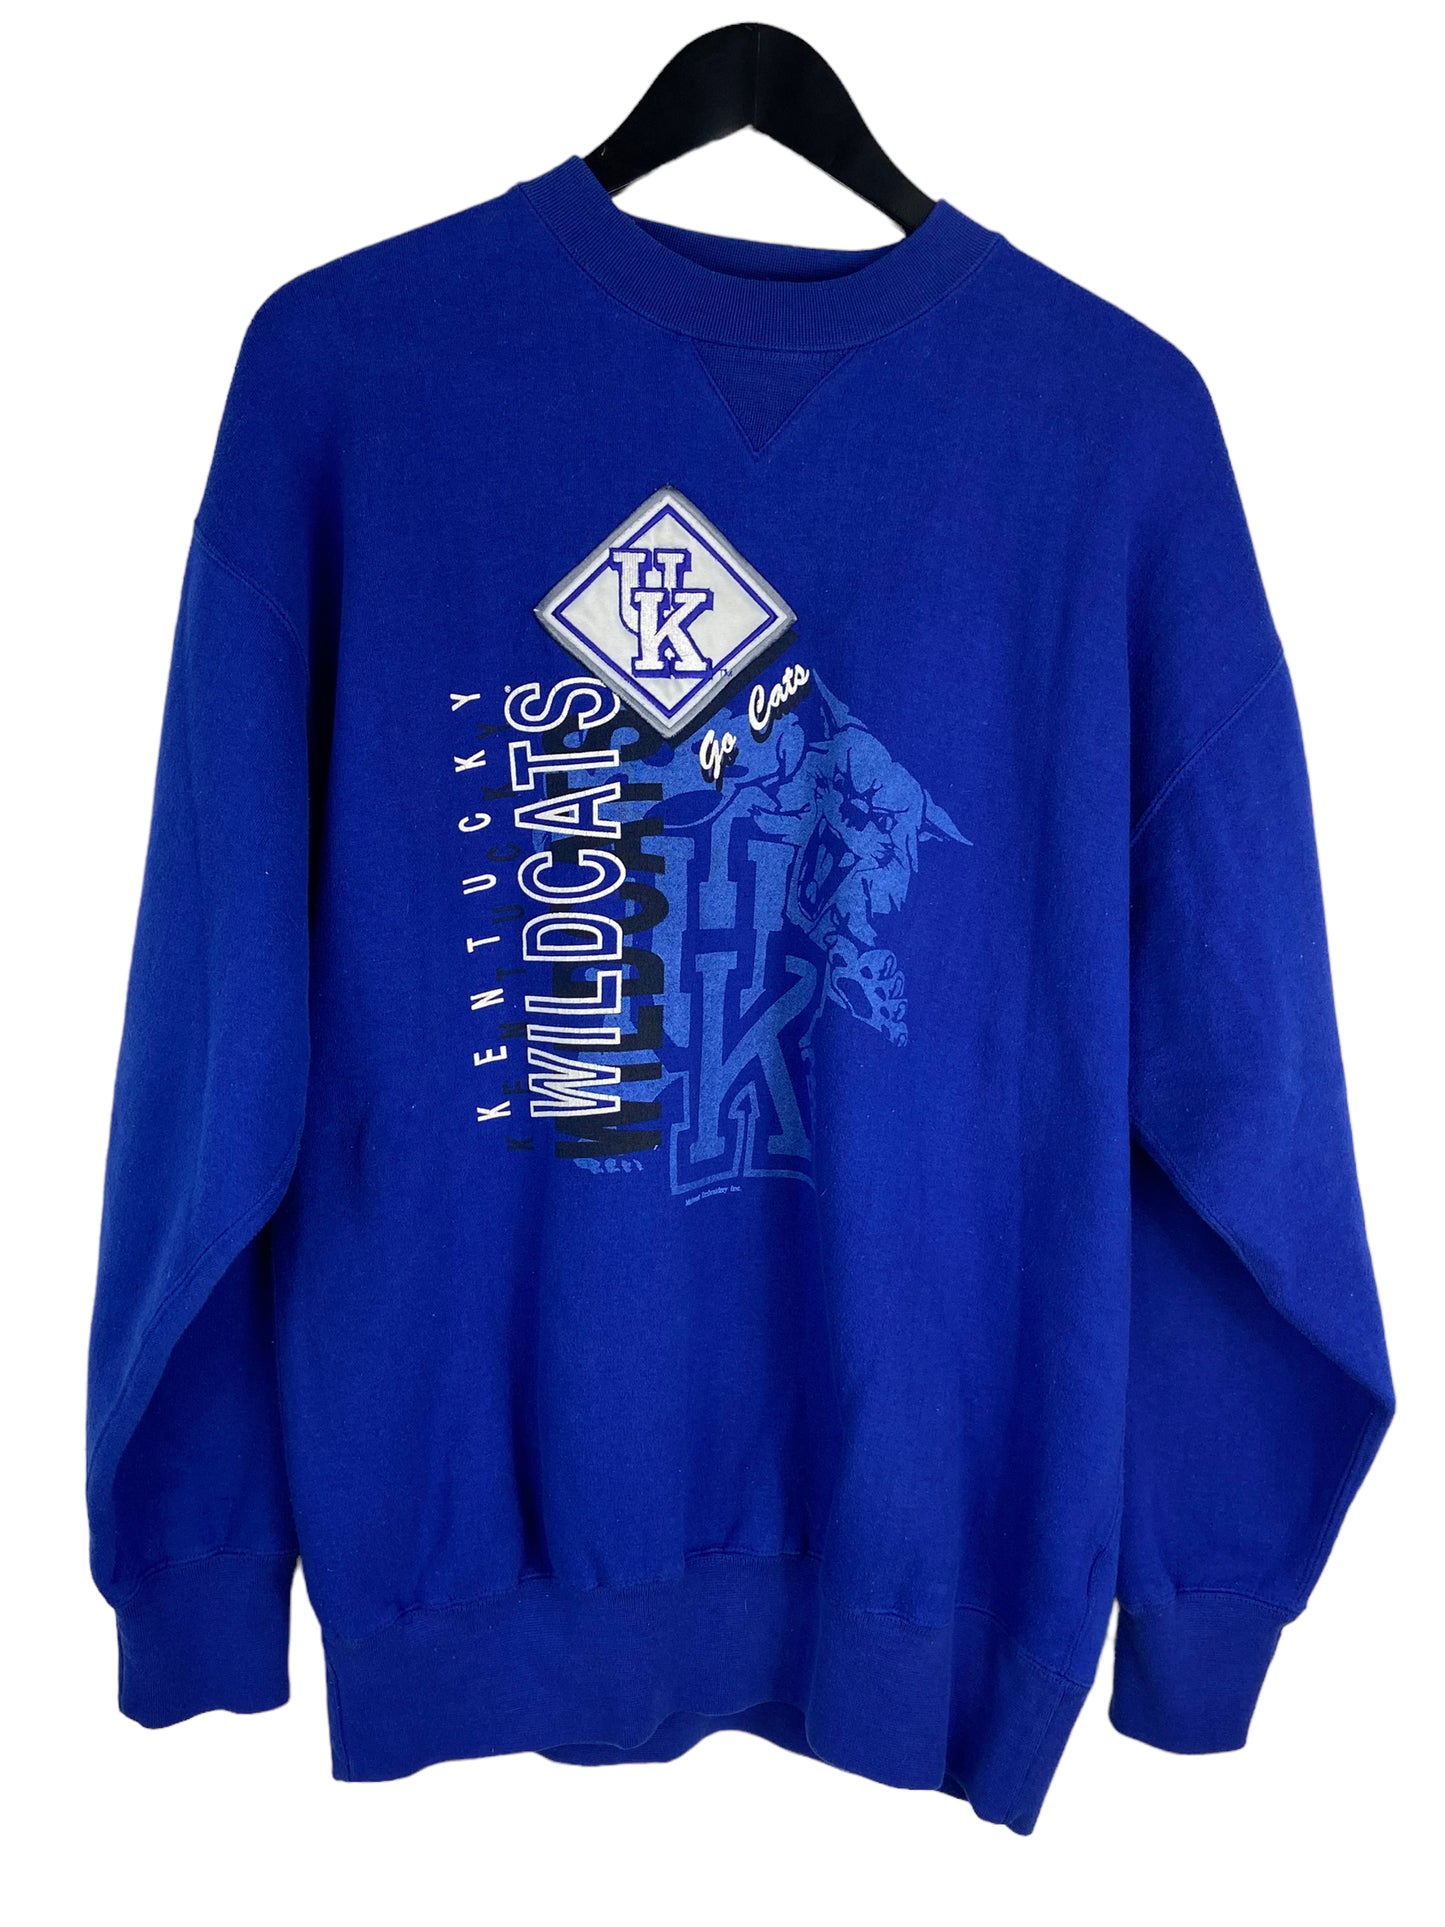 VTG Kentucky Wildcats Embroidered Sweatshirt Sz XL/XXL